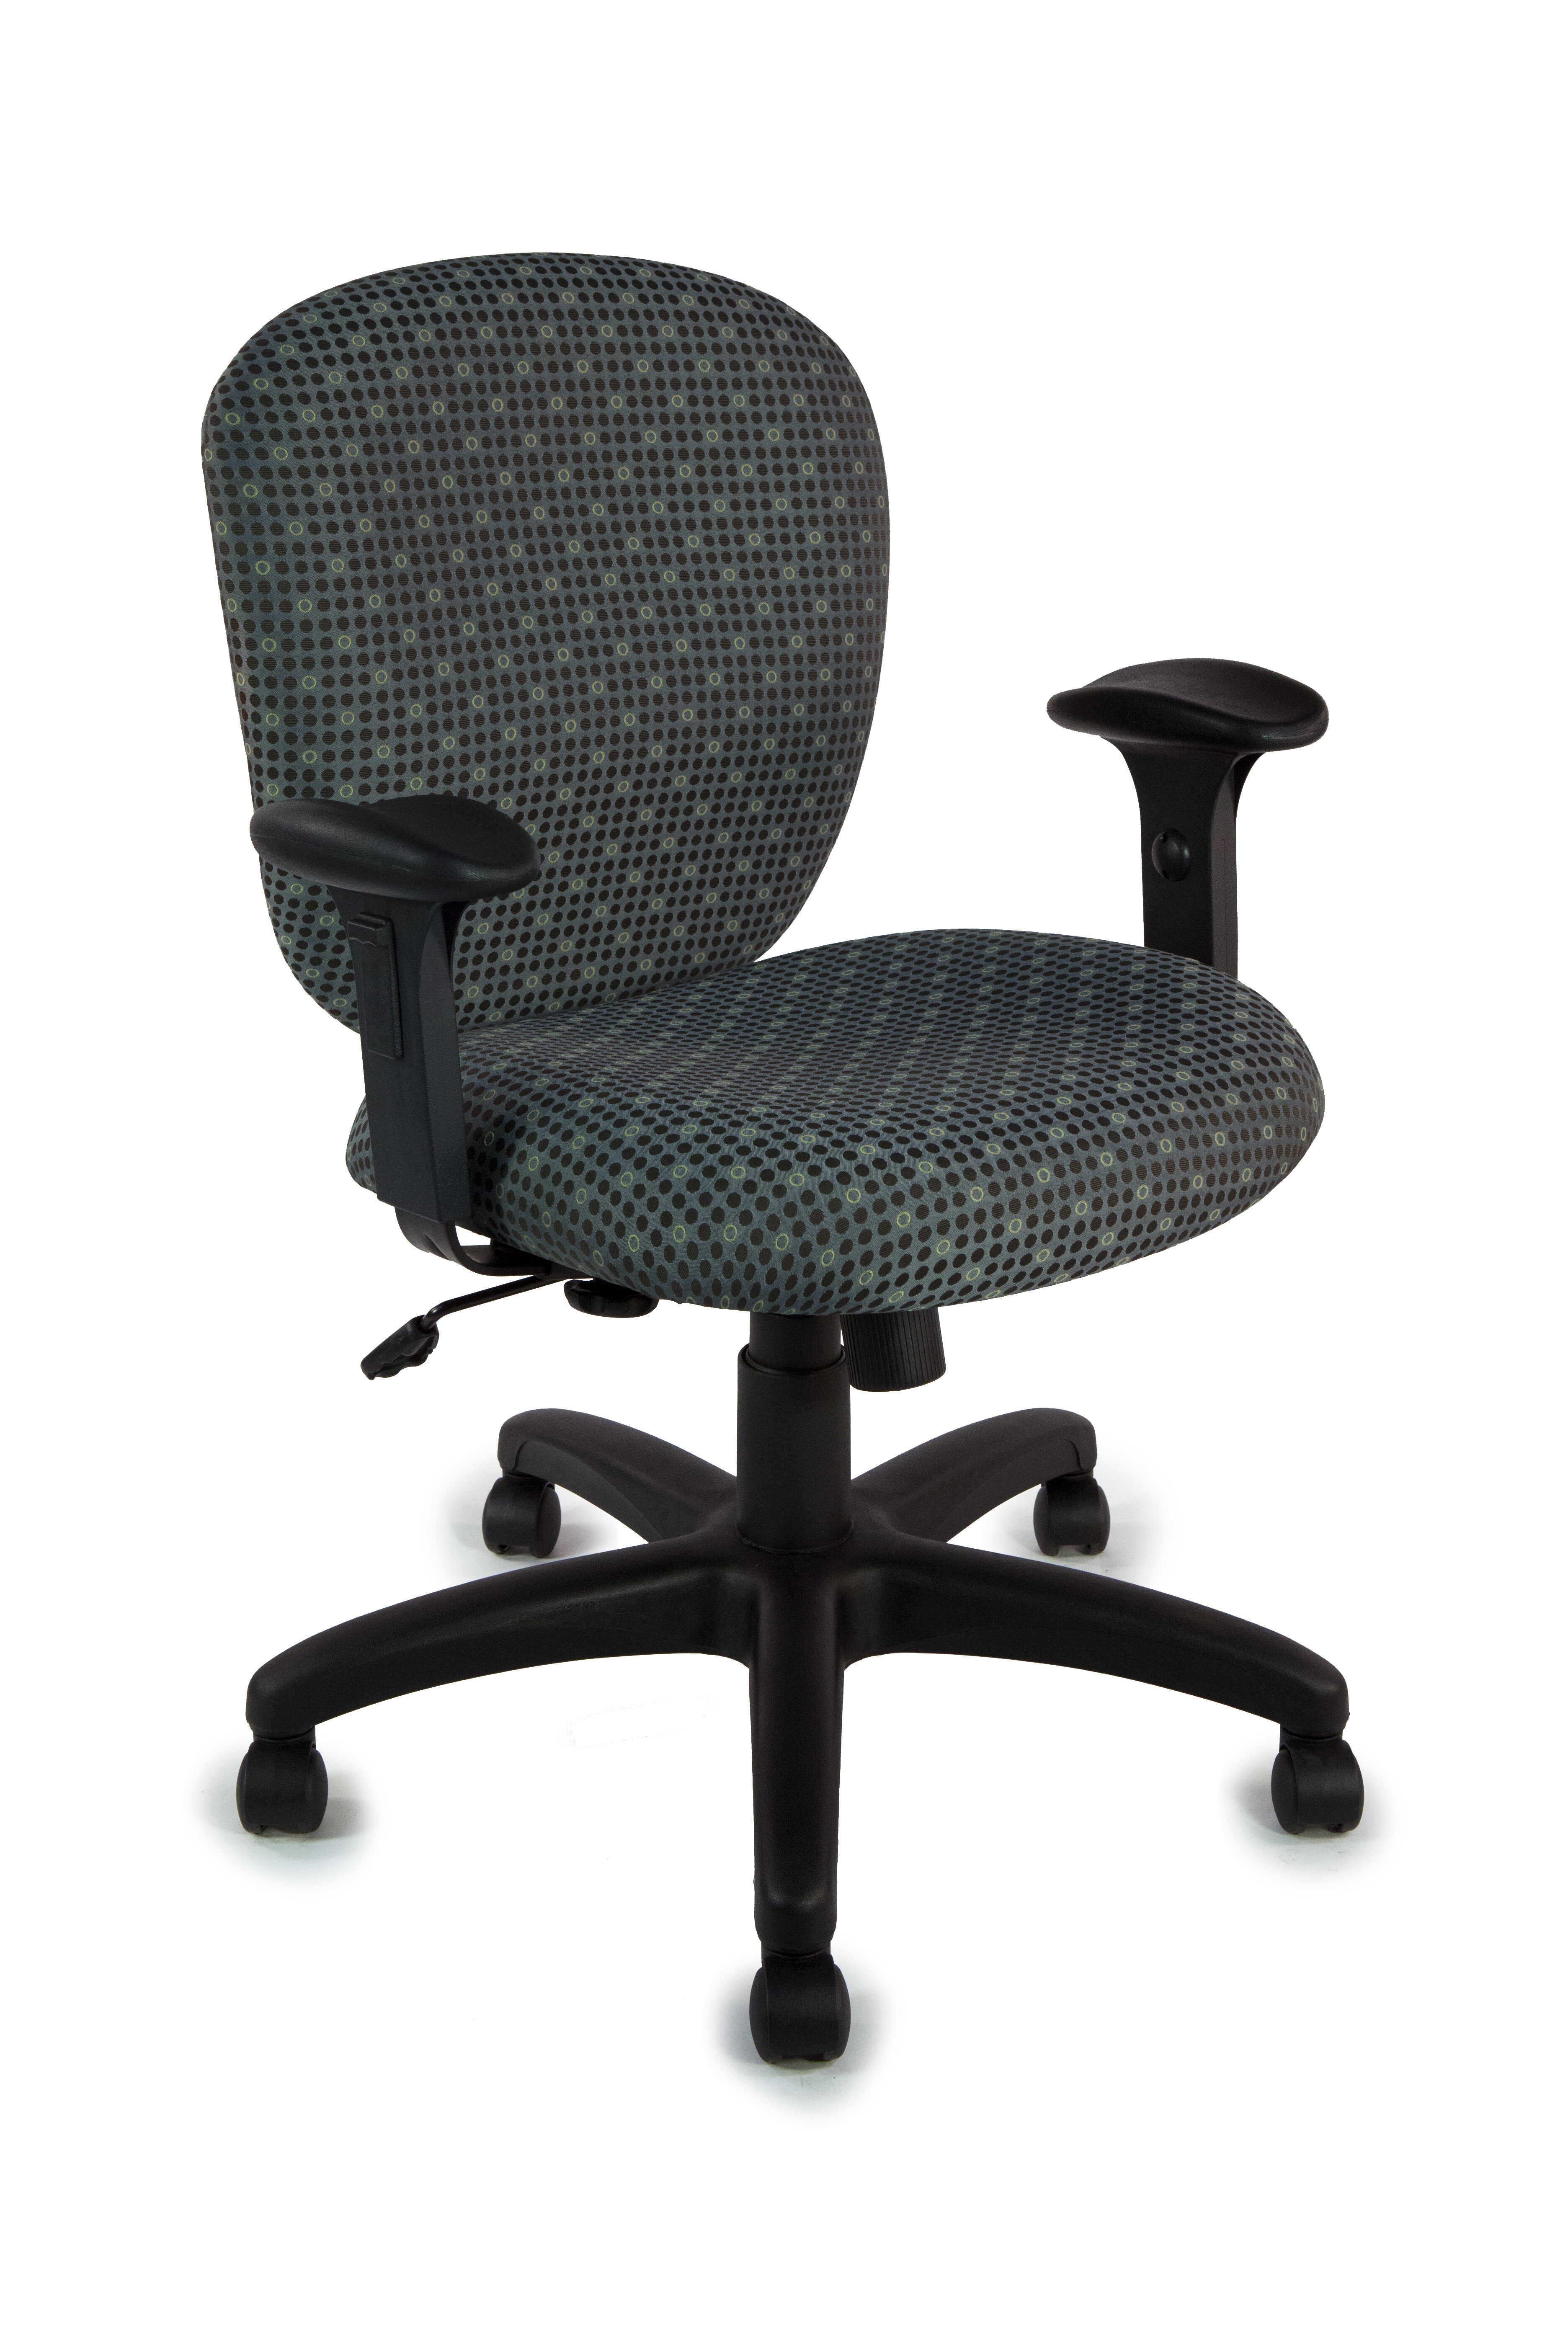 TrendSit Spin MidBack Desk Chair Wayfair